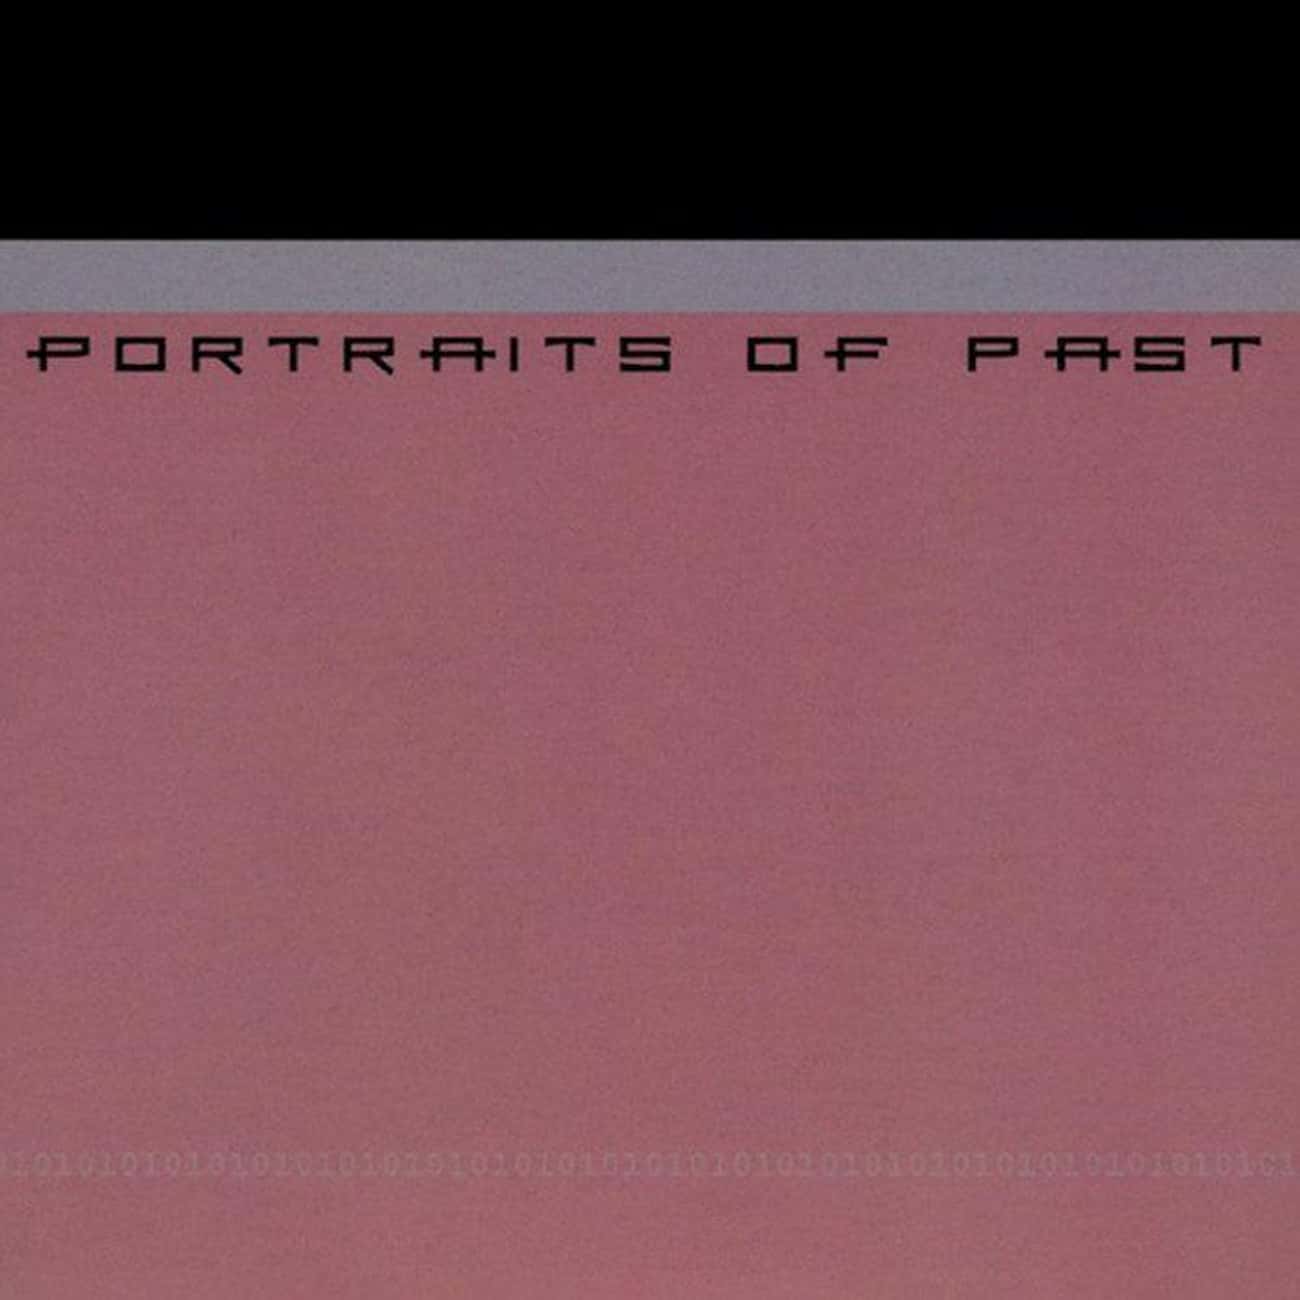 Portraits of Past - '01010101'